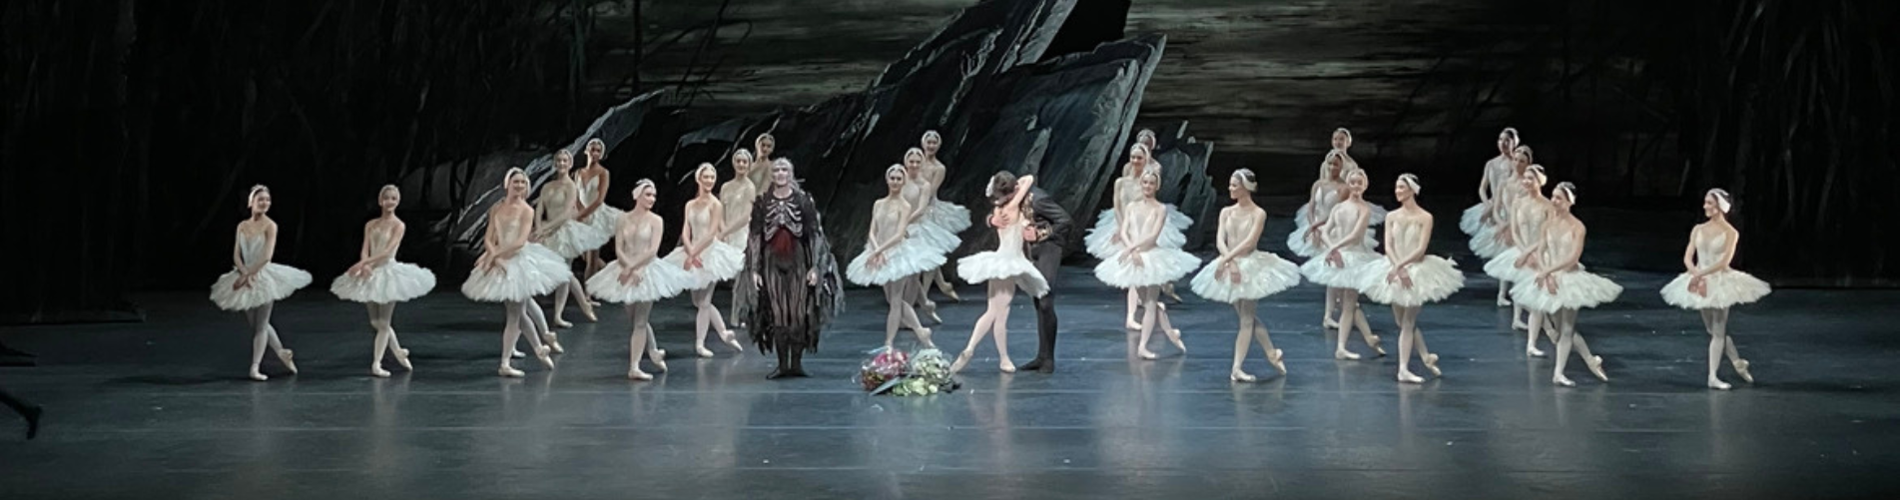 Ballet performance at the Royal Opera House